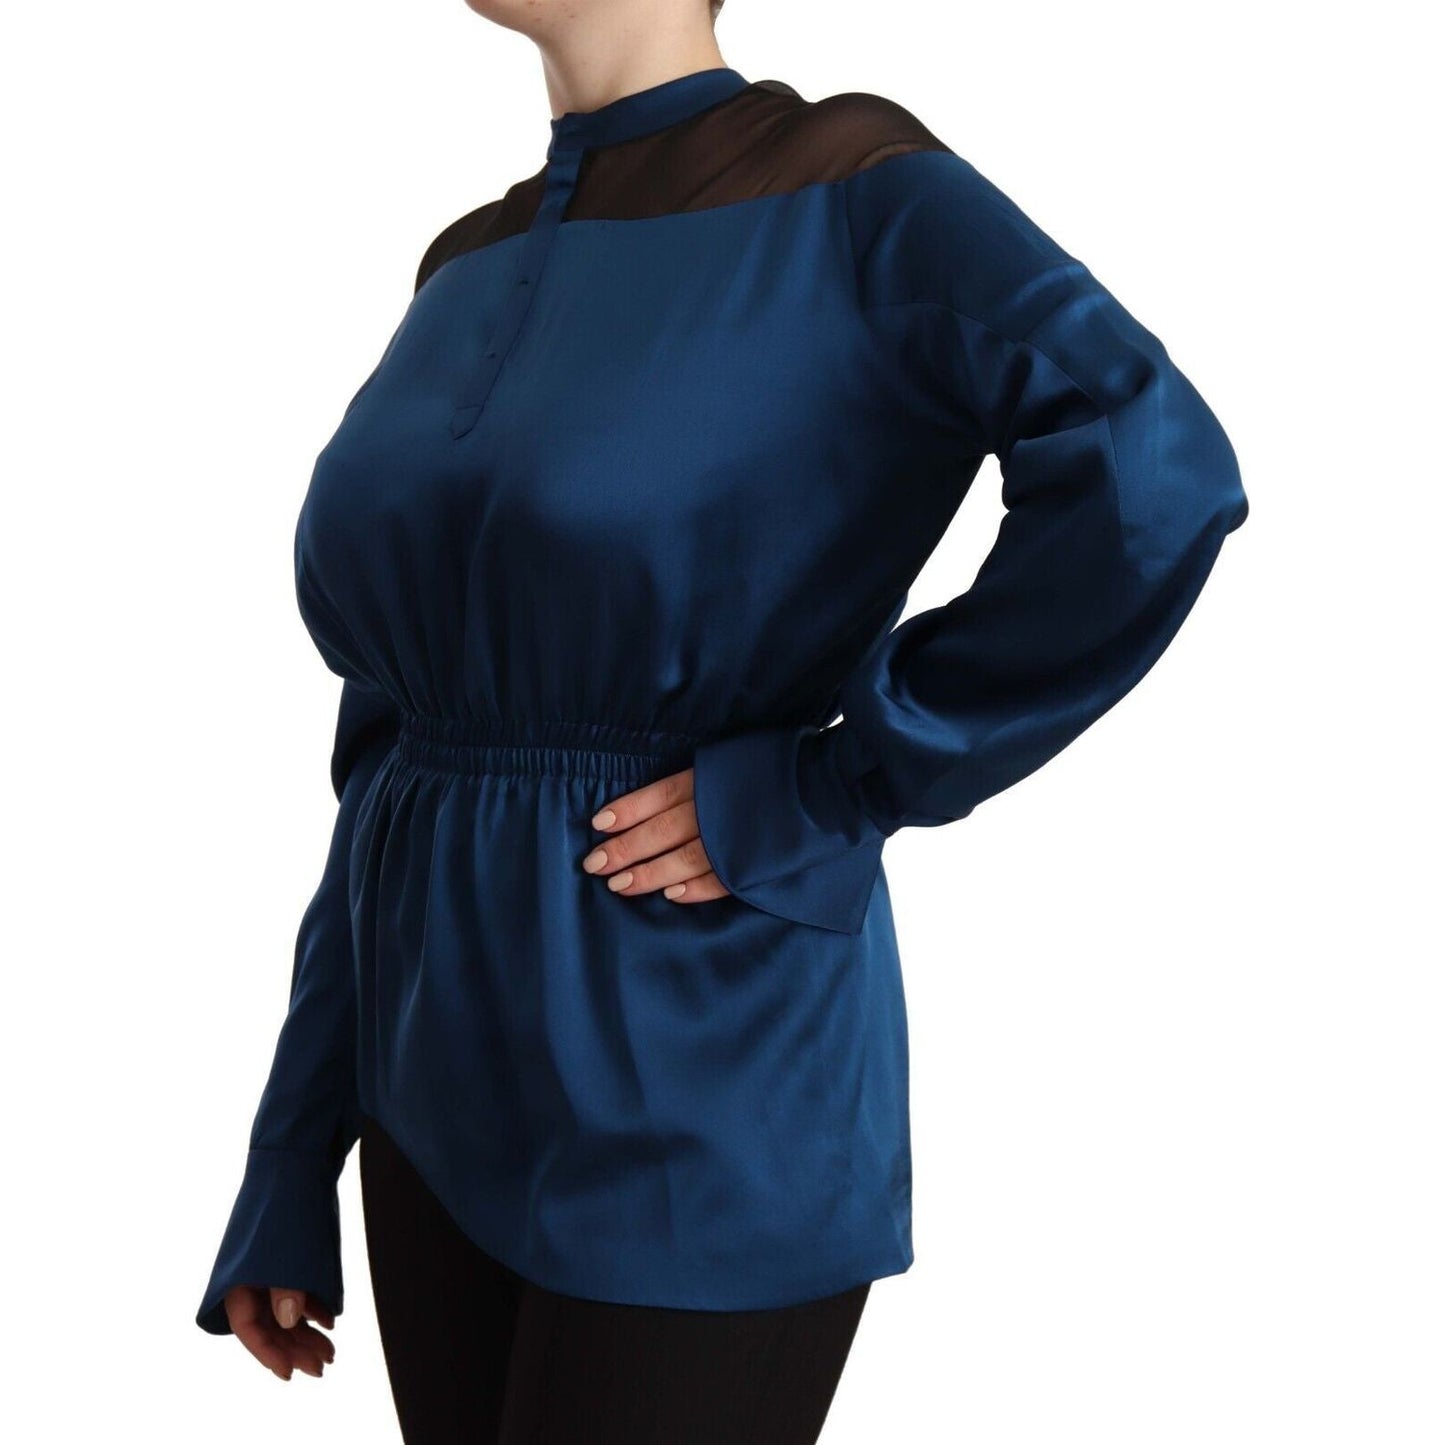 Masha Ma Elegant Crew Neck Silk Blouse in Blue blue-silk-long-sleeves-elastic-waist-top-blouse WOMAN TOPS AND SHIRTS s-l1600-1-28-5822fd01-d85.jpg